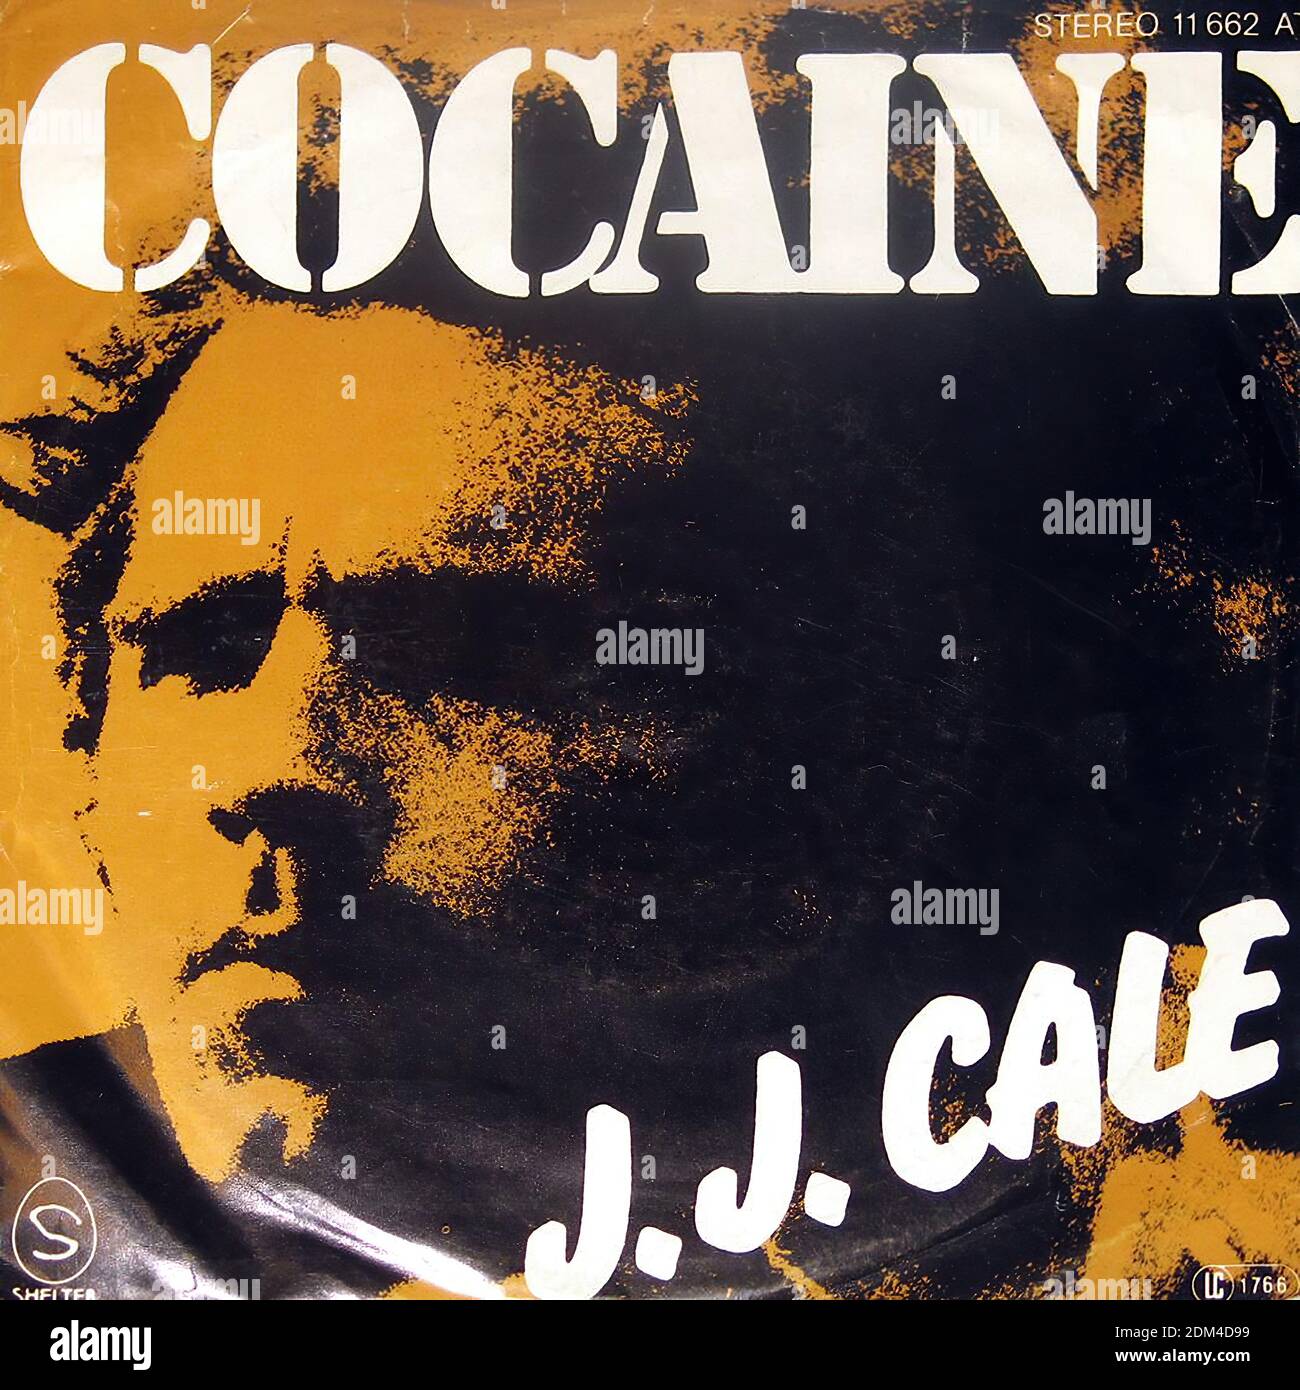 J.J. Cale Cocaine Hey Baby 7 Single - Vintage Vinyl Record Cover Stock  Photo - Alamy